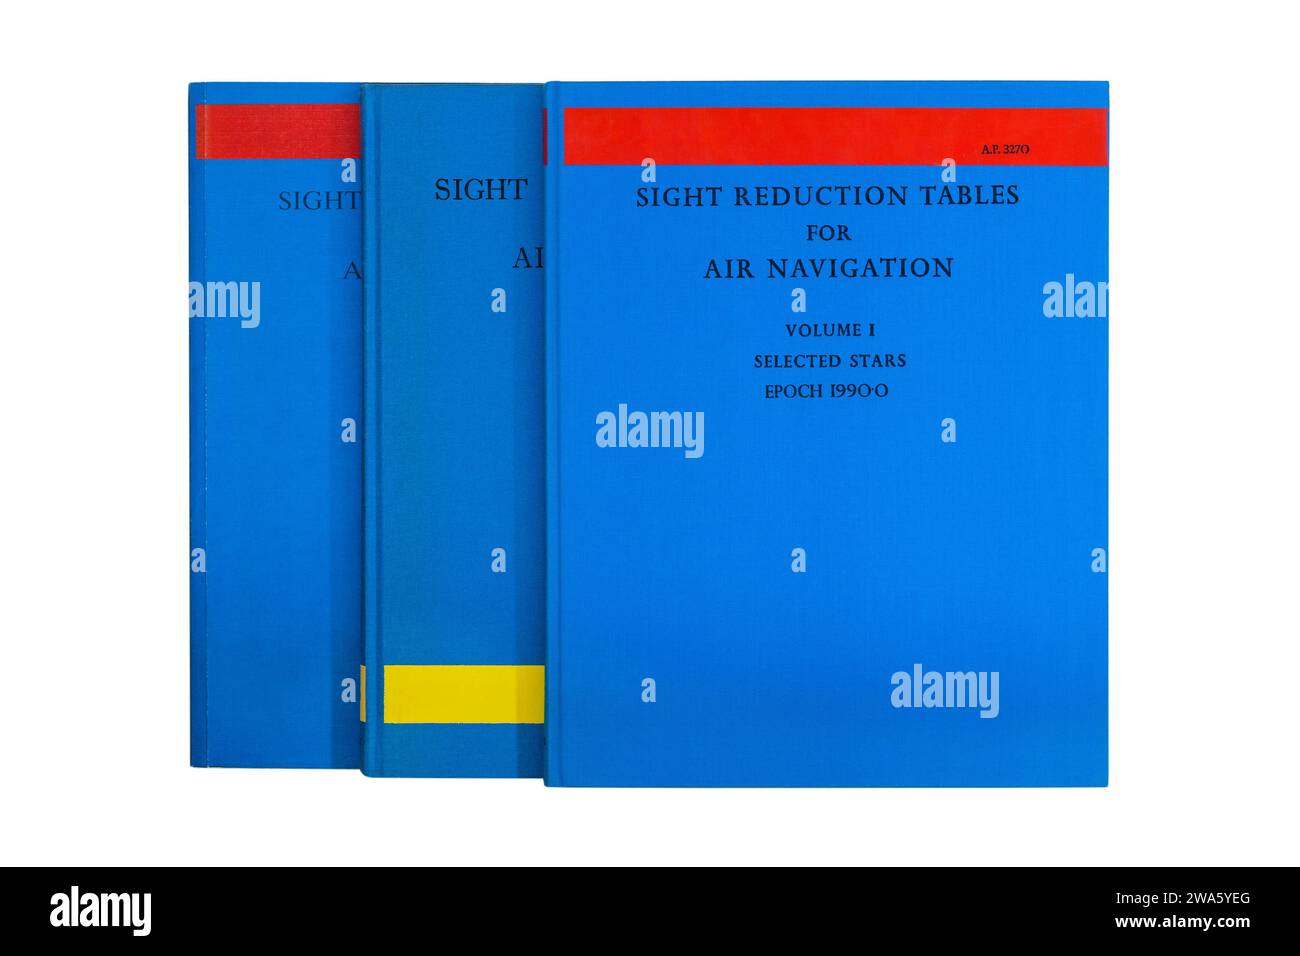 Sight Reduction Tables for Air Navigation Volume 1 Selected Stars Epoch 1990-0 Buch isoliert auf weißem Hintergrund Stockfoto